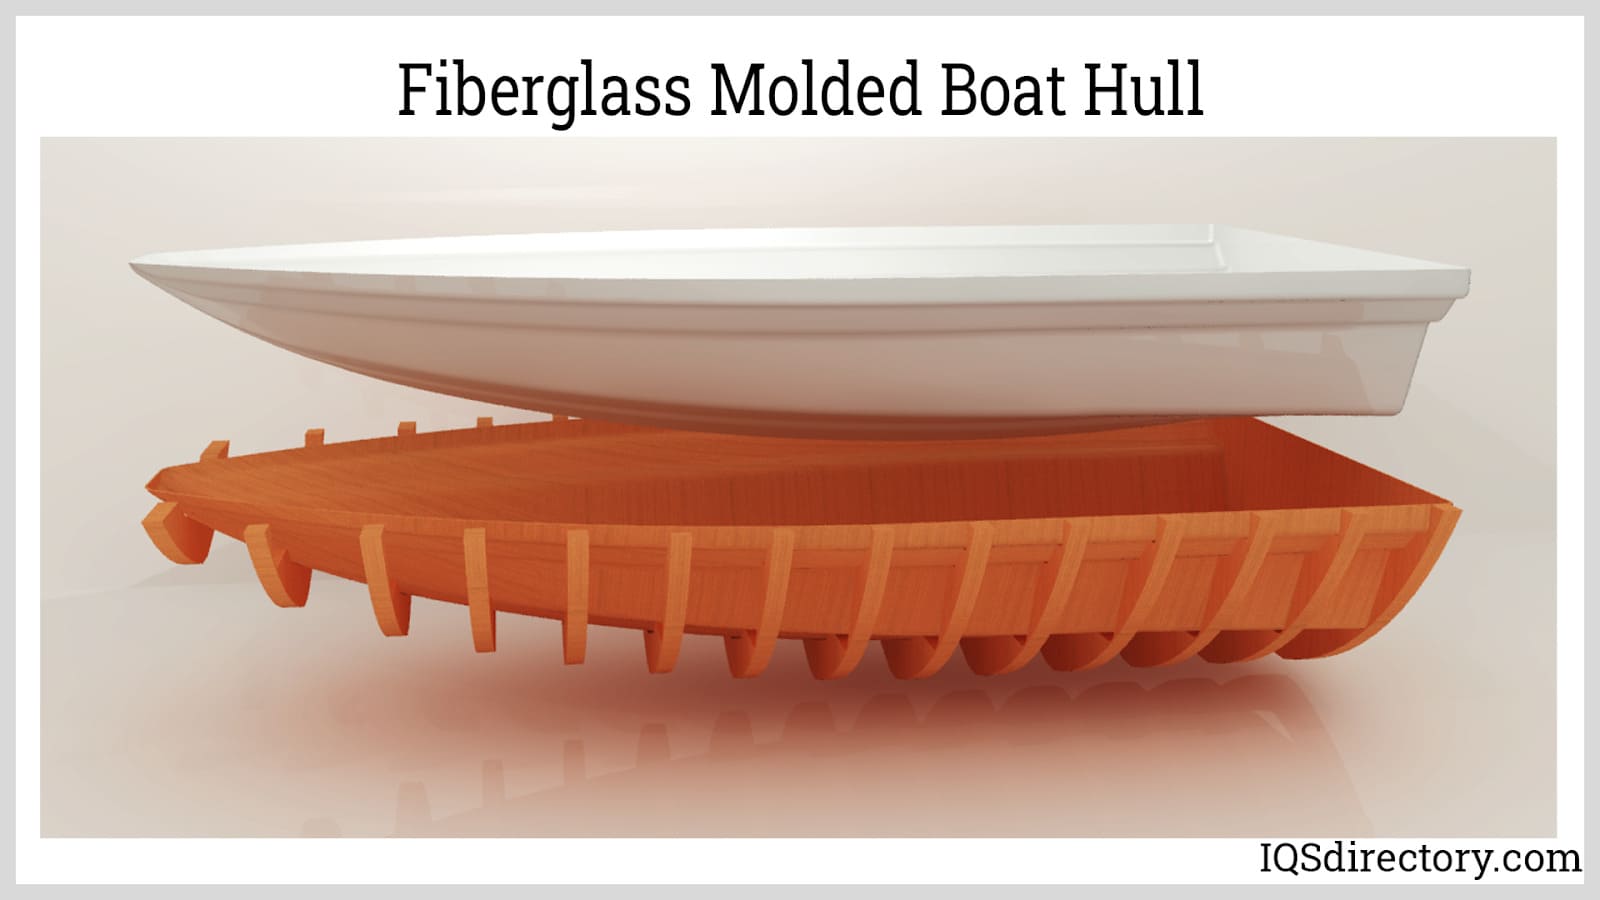 Fiberglass Molded Boat Hull